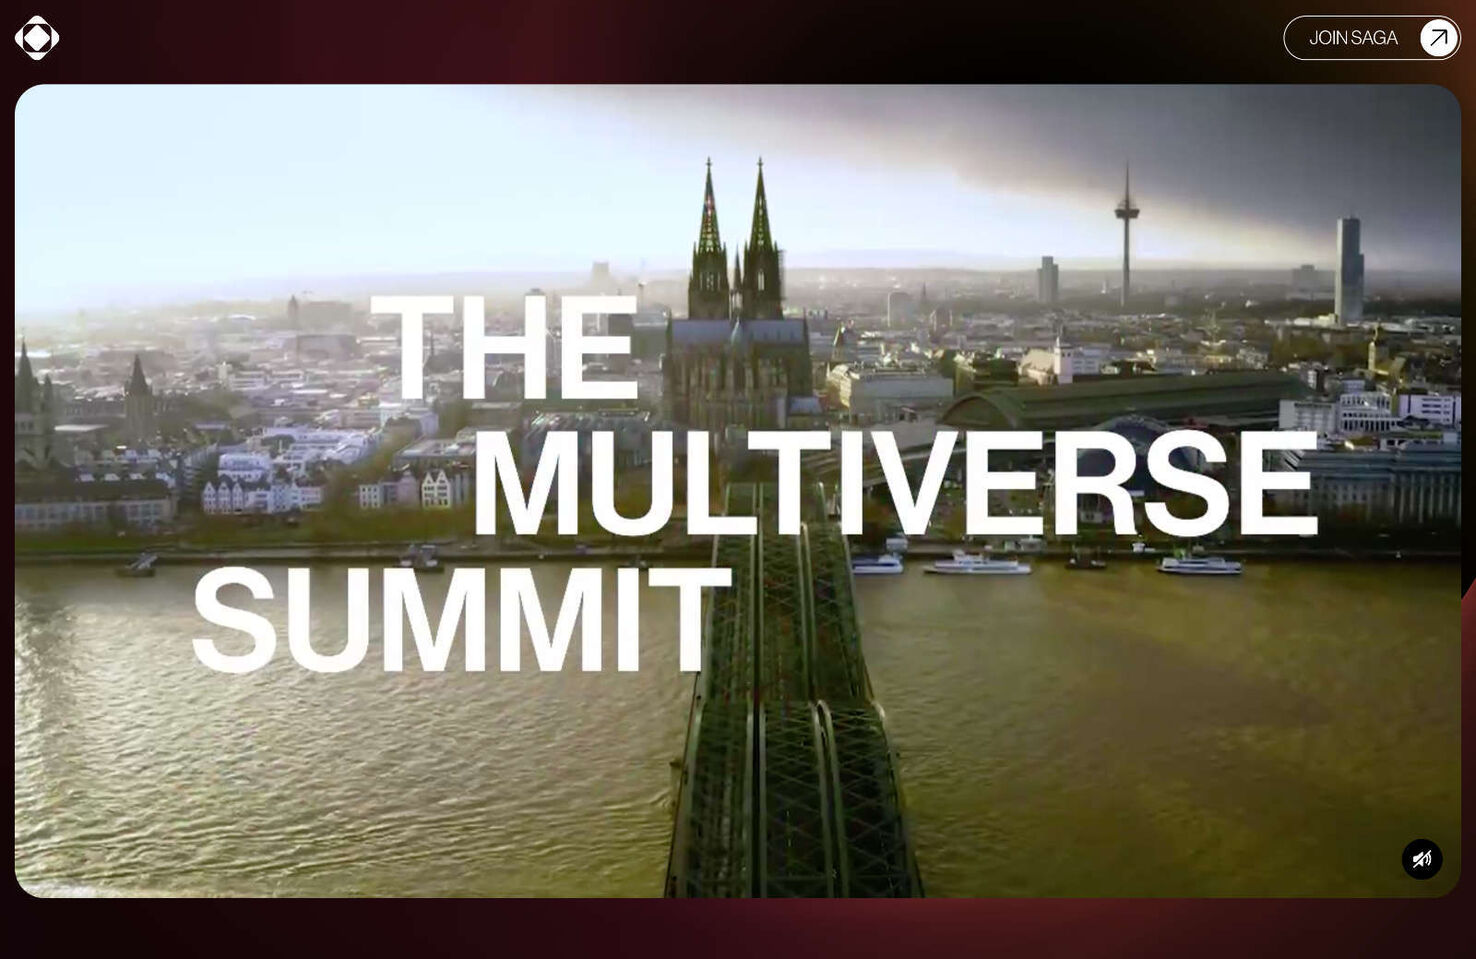 Cimeira do Multiverso